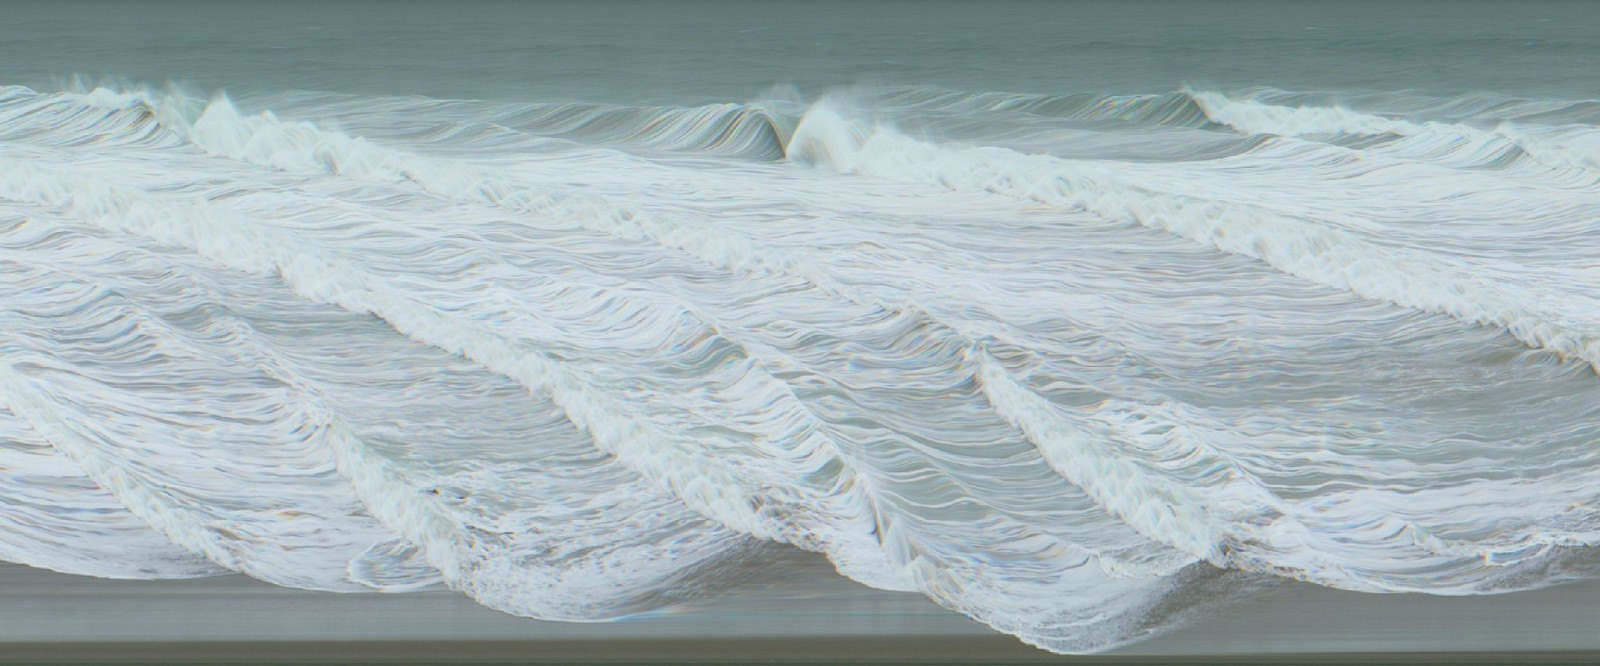 Jay Mark Johnson, STORM AT SEA #7, 2010 Malibu - Ventura CA
archival pigment on paper, mounted on aluminum, 40 x 96 in. (101.6 x 243.8 cm)